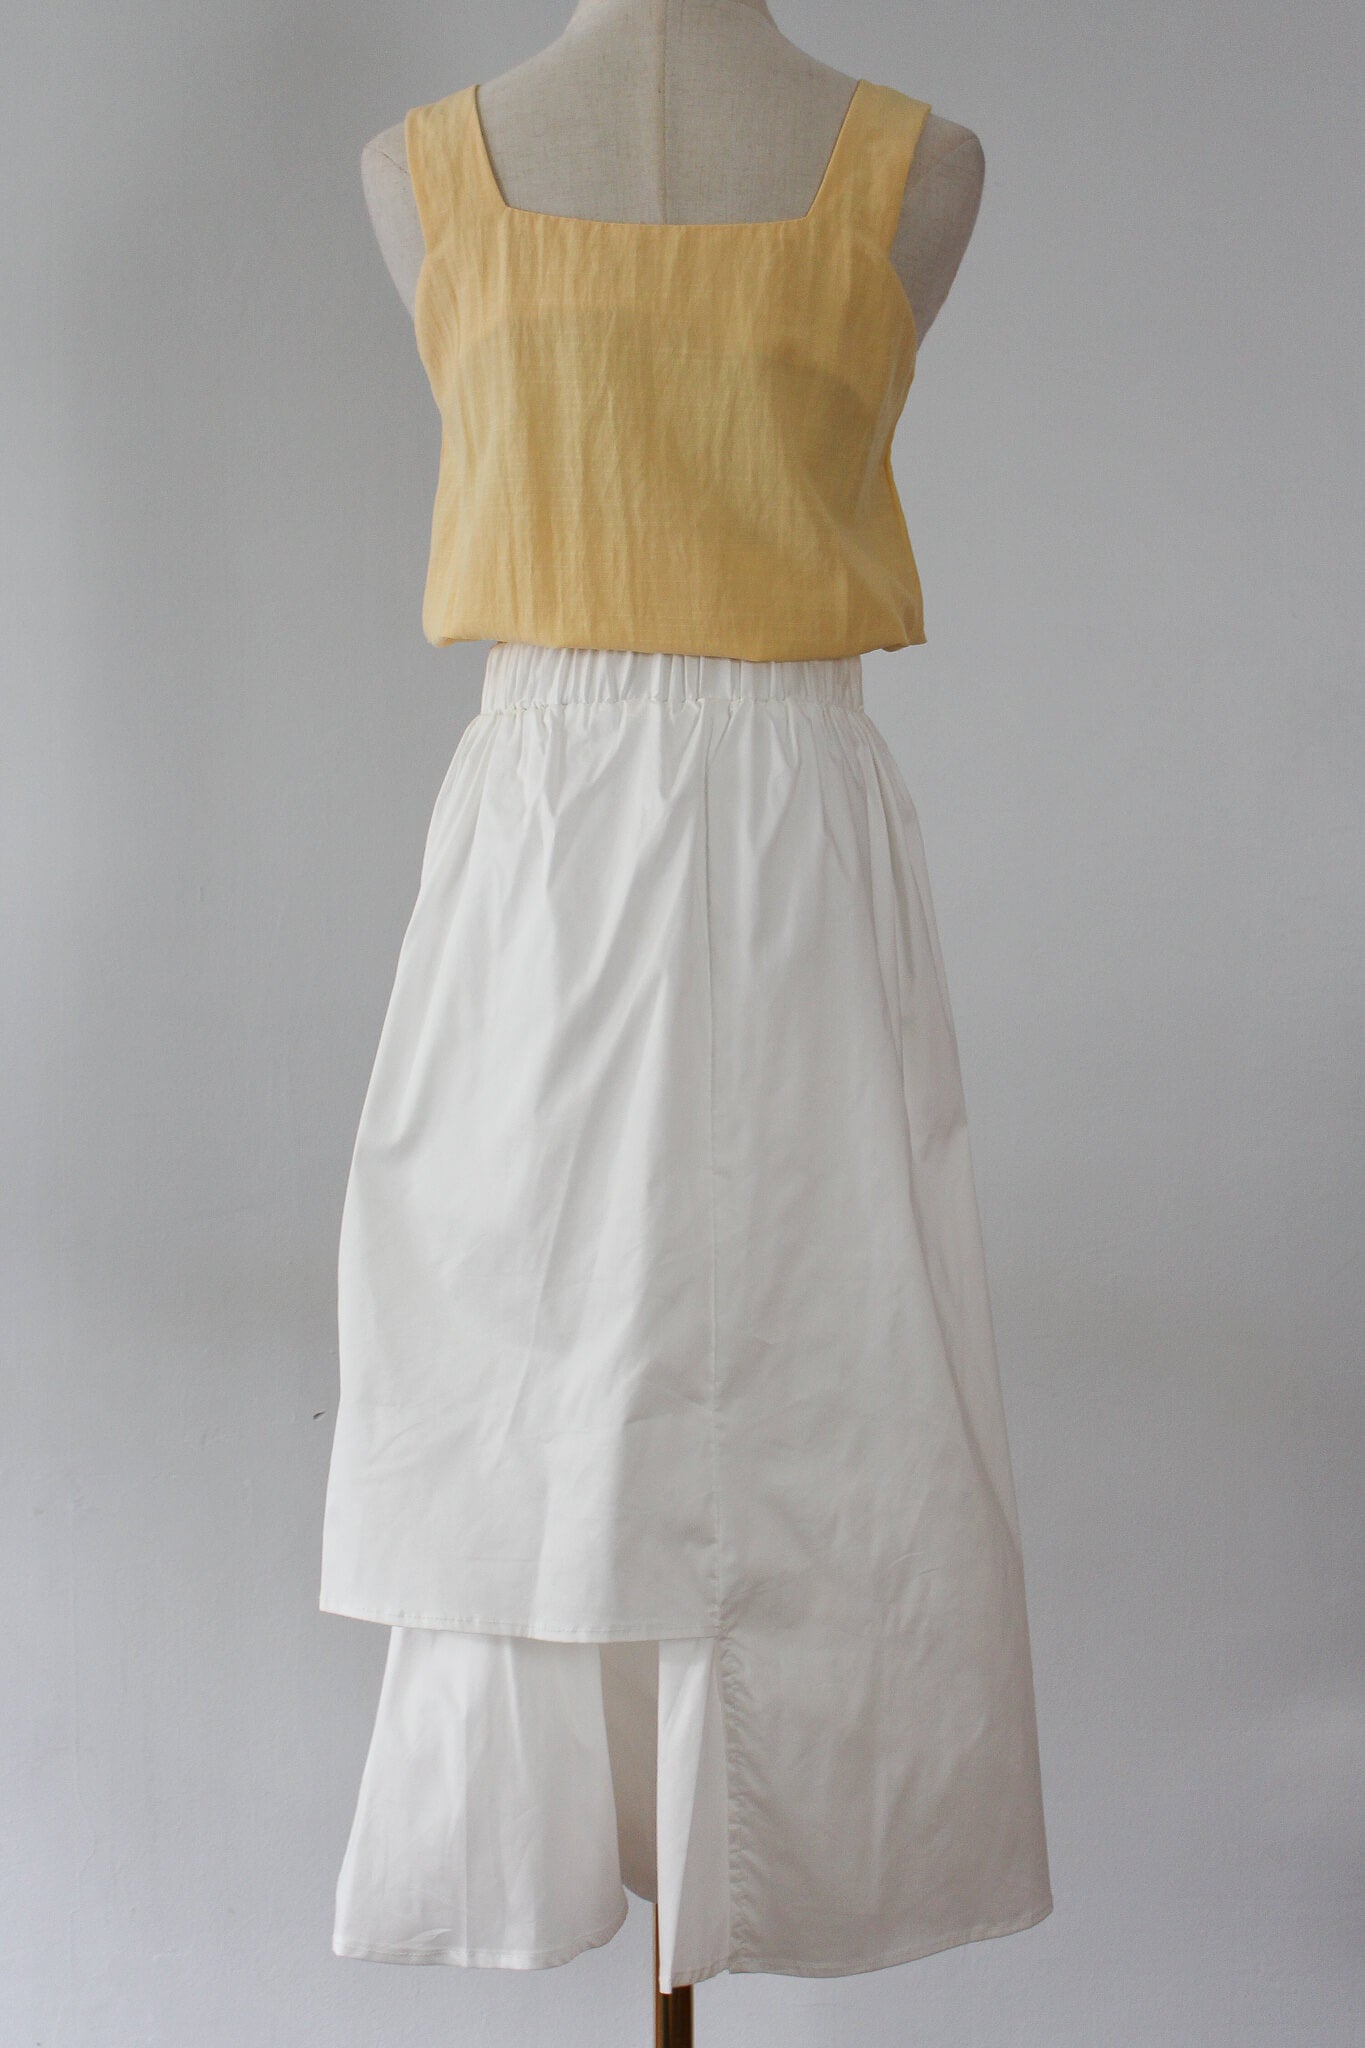  Asymmetrical Layered Midi Skirt with pleats